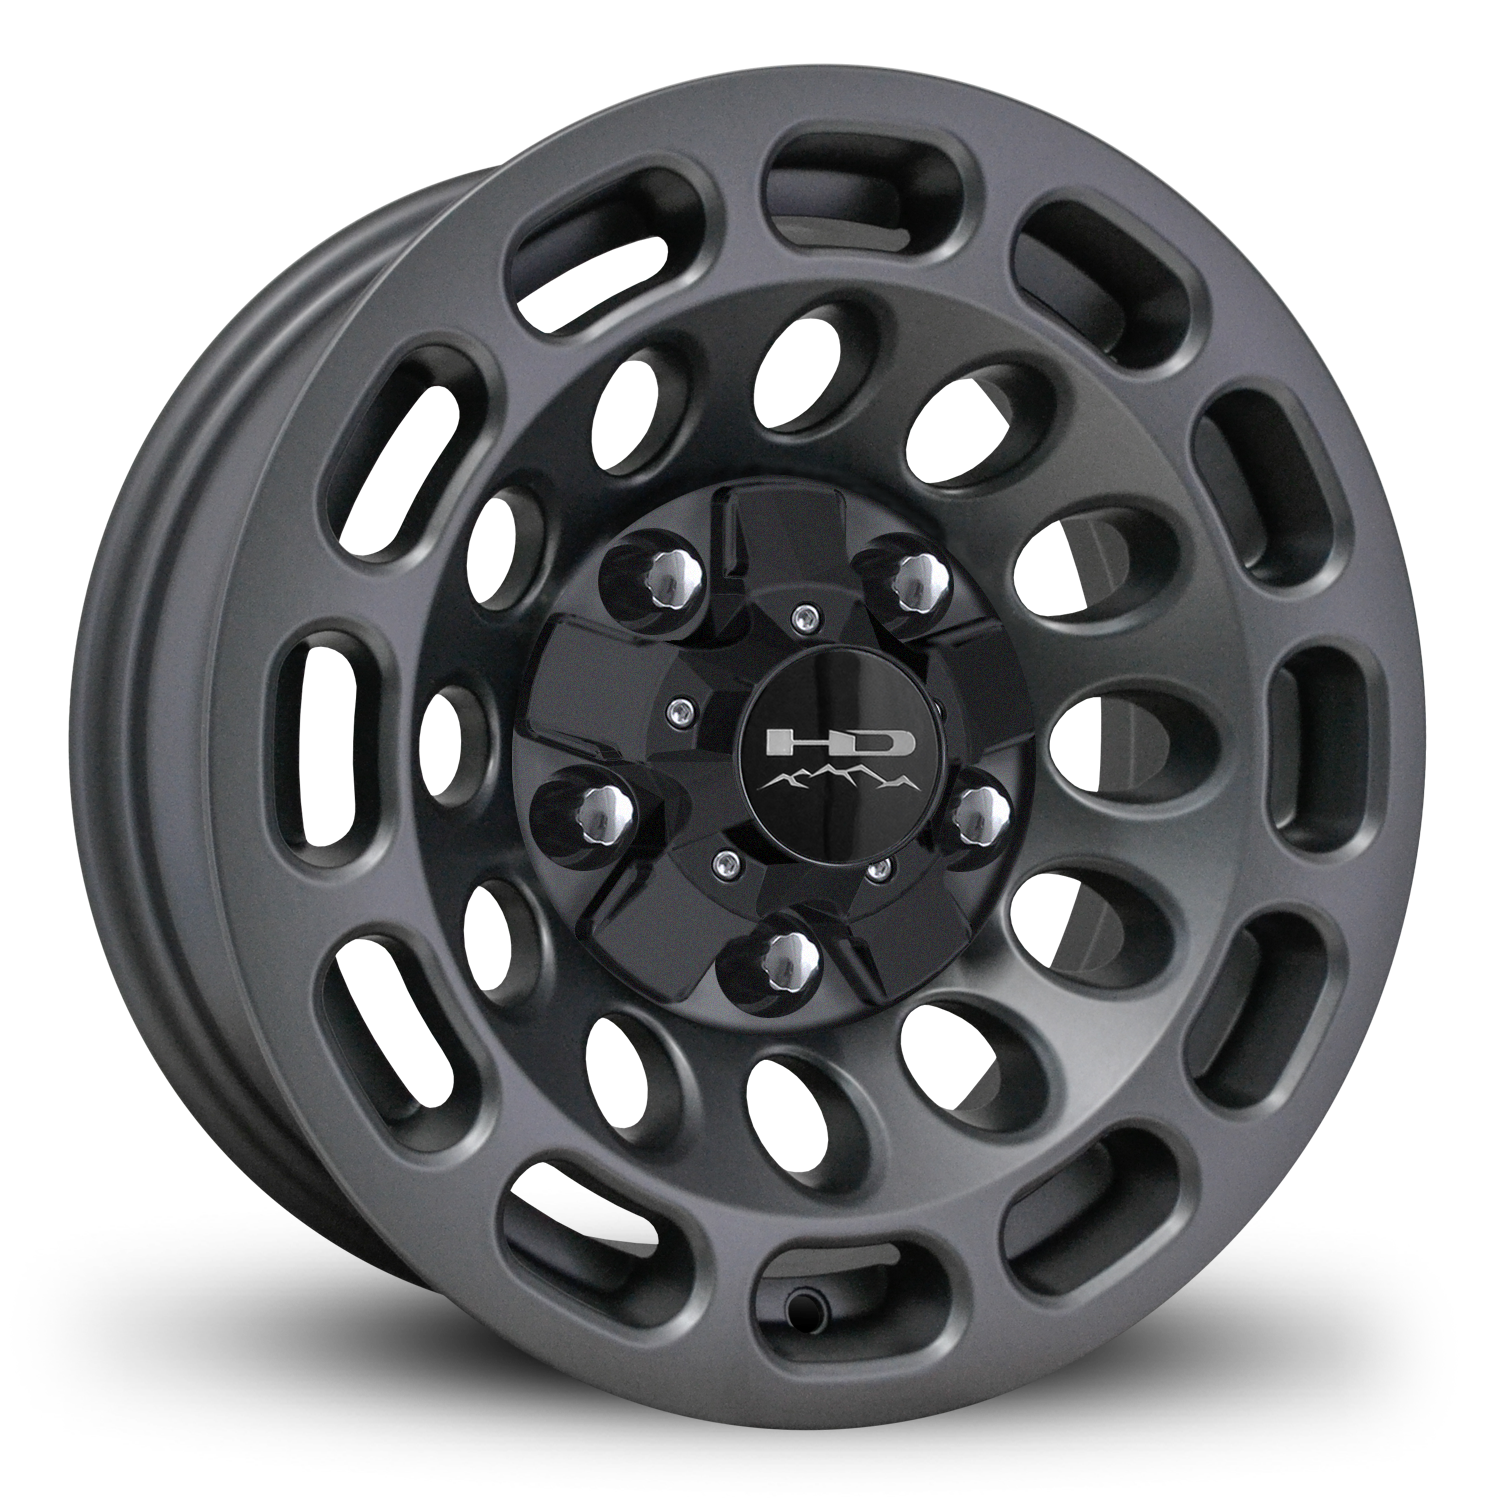 HD Off-Road Road Warrior Custom Trailer Wheels in 15x6.0 in 5 lug All Satin Grey for Unility, Boat, Car, Construction, Horse, & RV